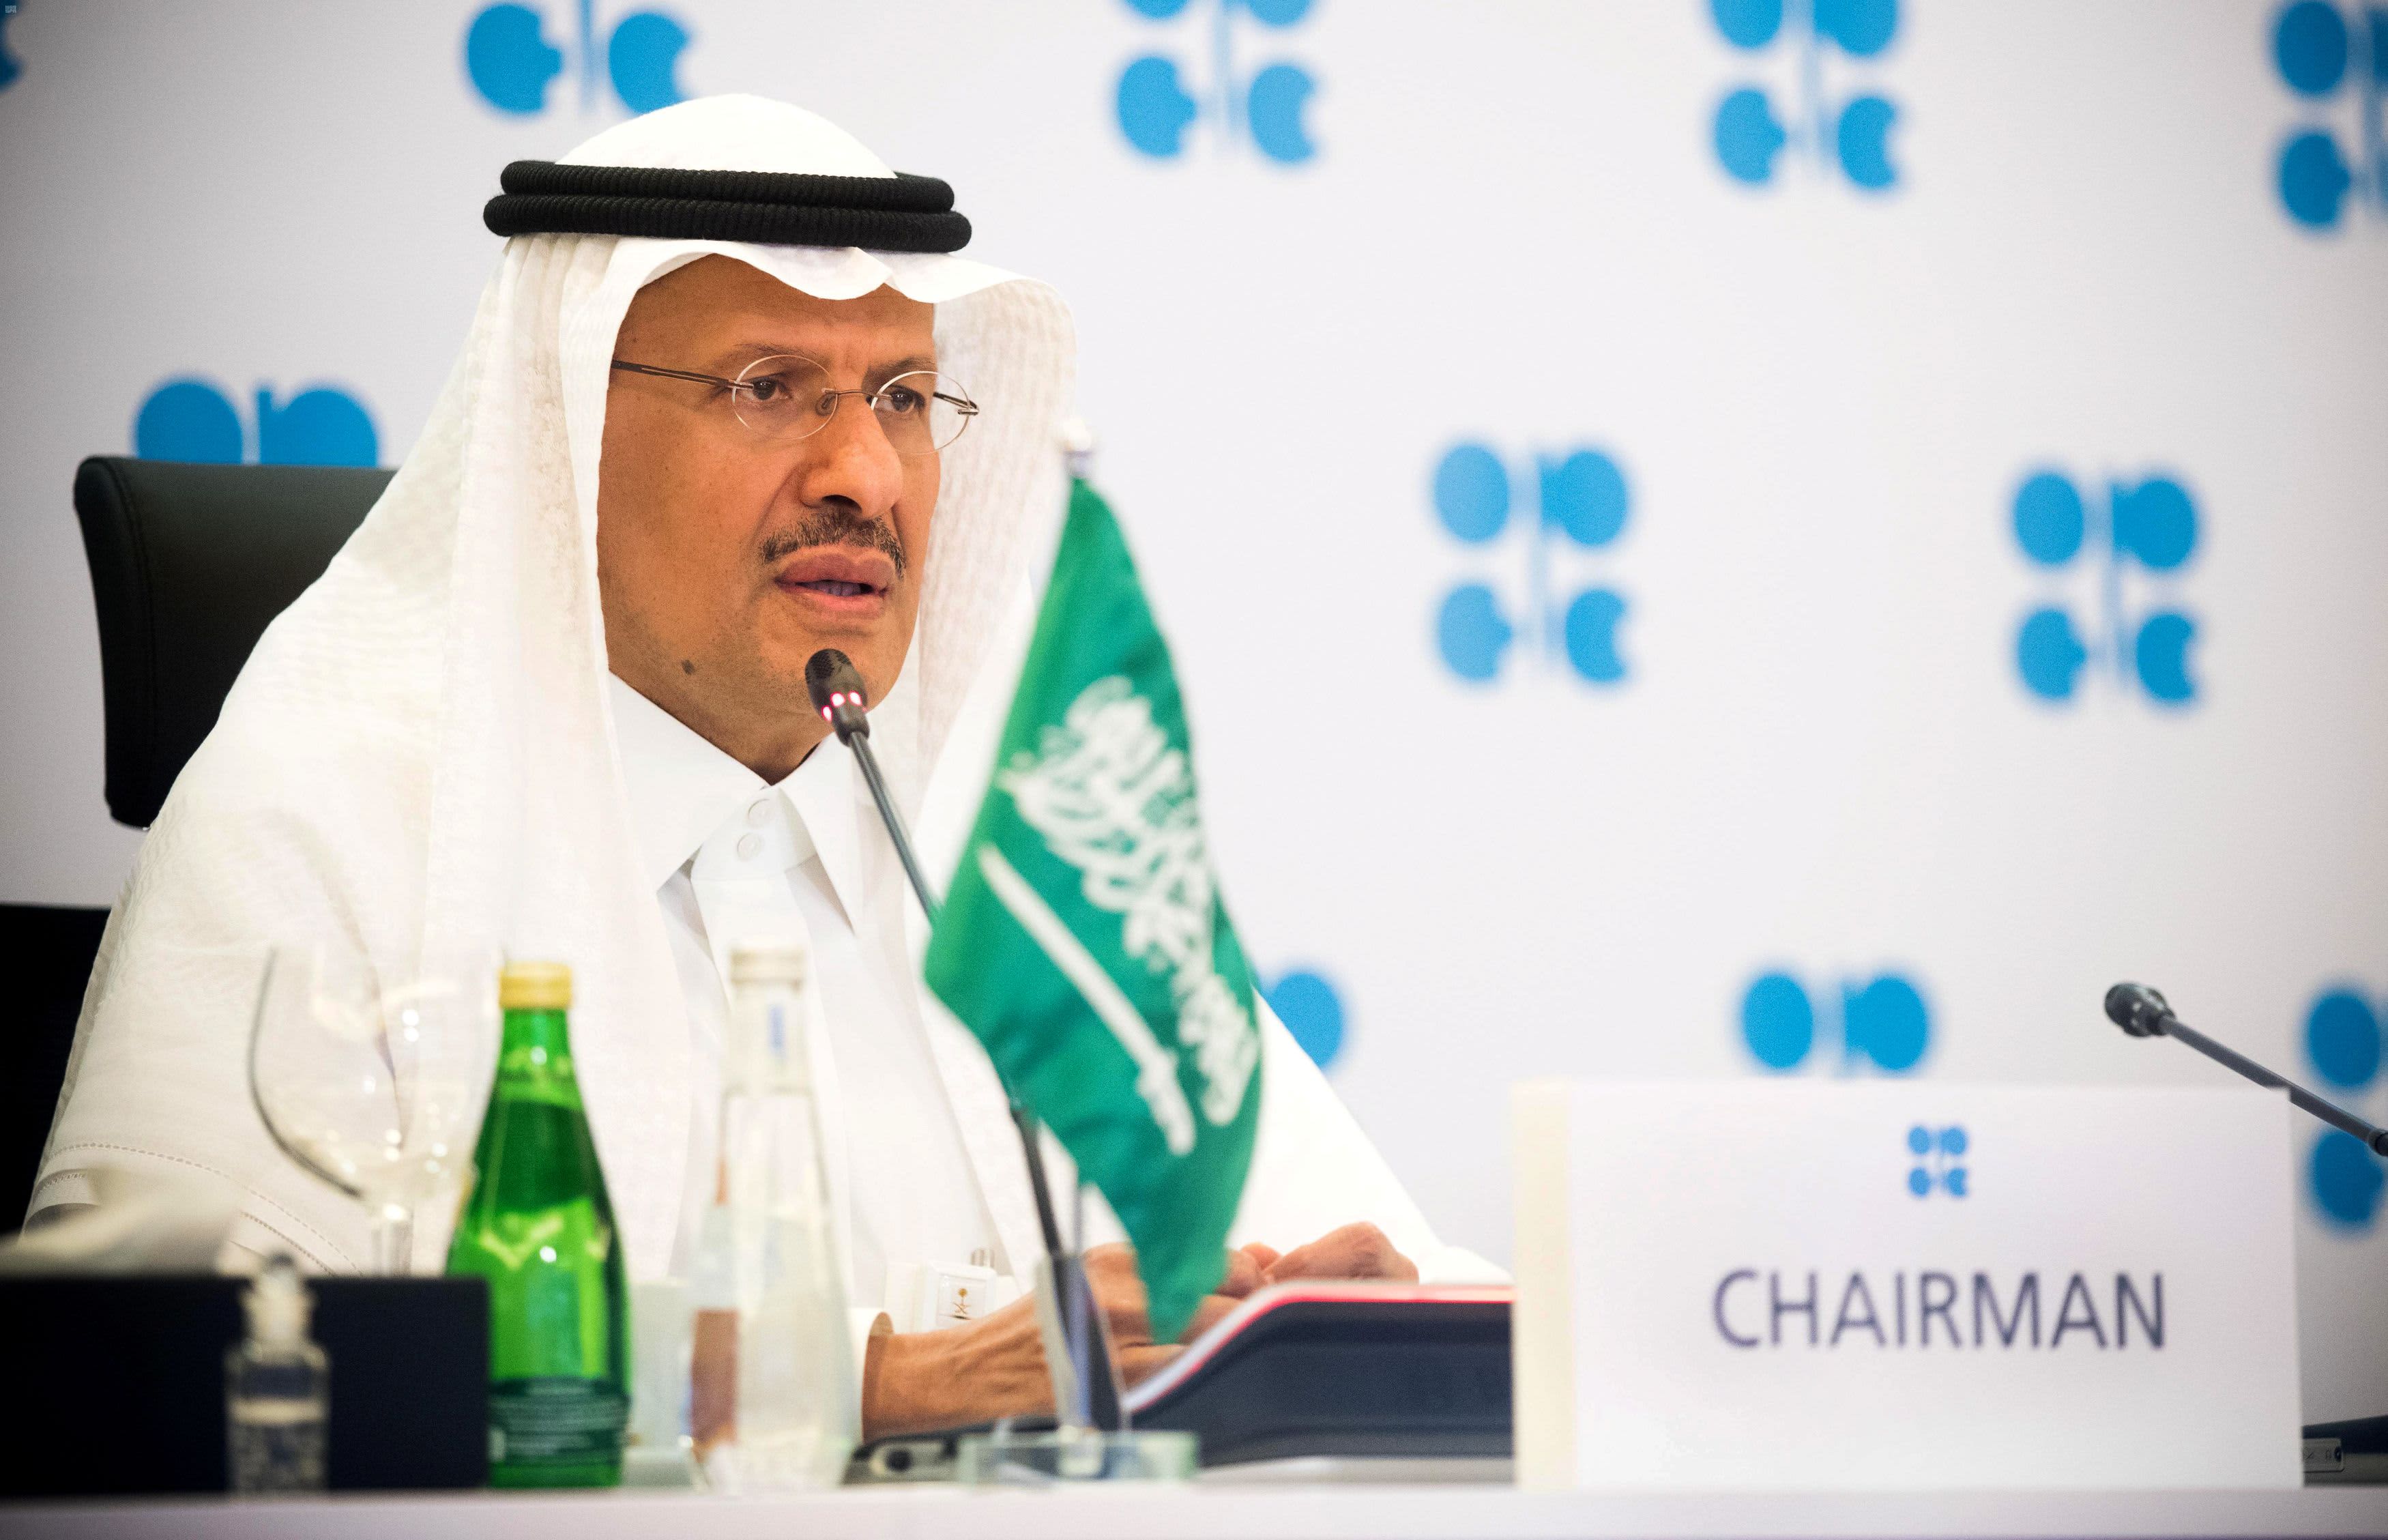 opec+ meeting: saudi arabia, uae in focus over oil output policy